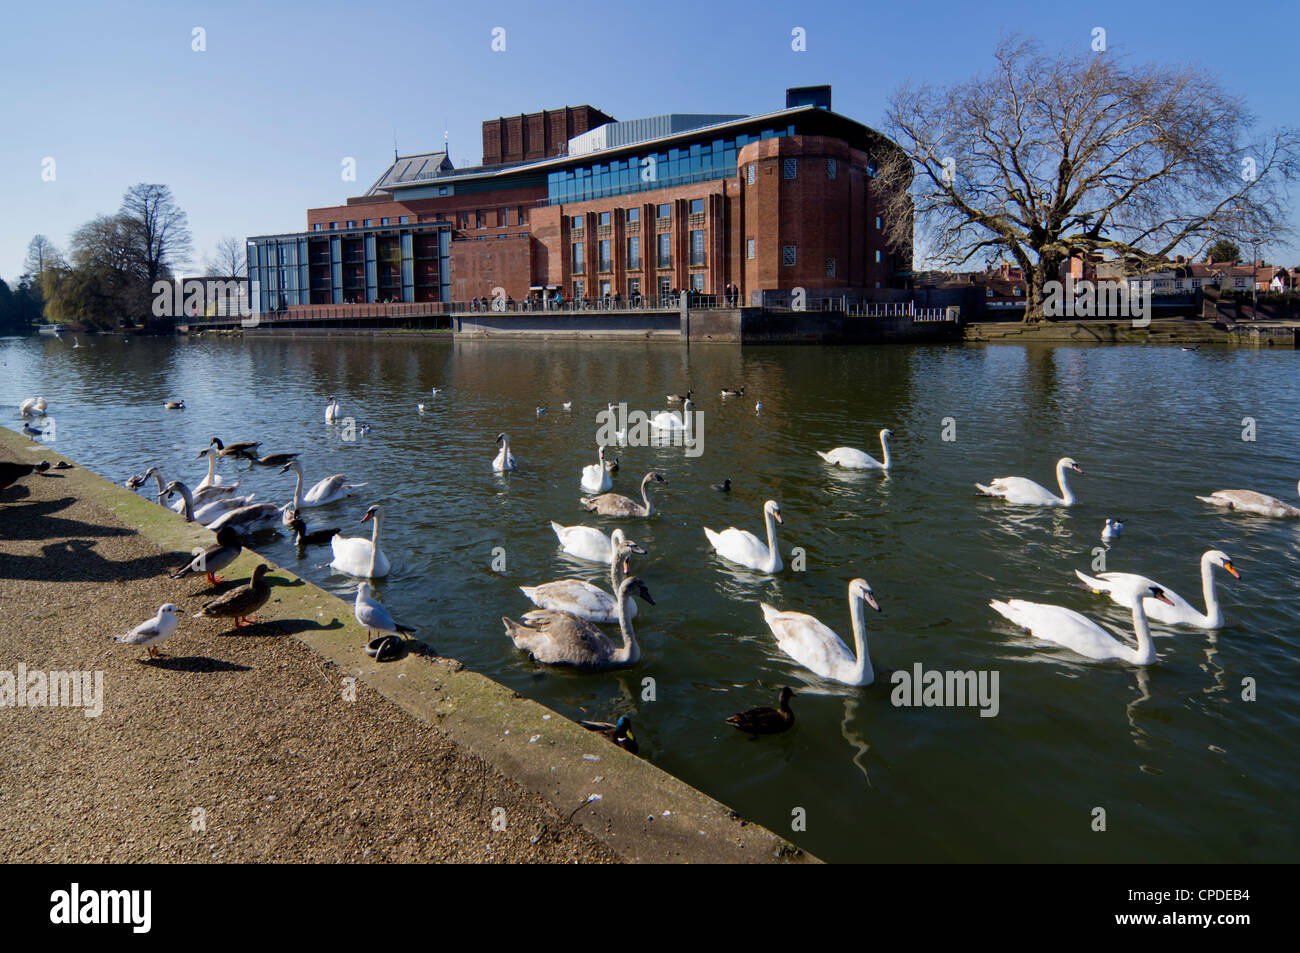 Theatre and swans on the River Avon, Stratford upon Avon, Warwickshire, England, United Kingdom, Europe Stock Photo